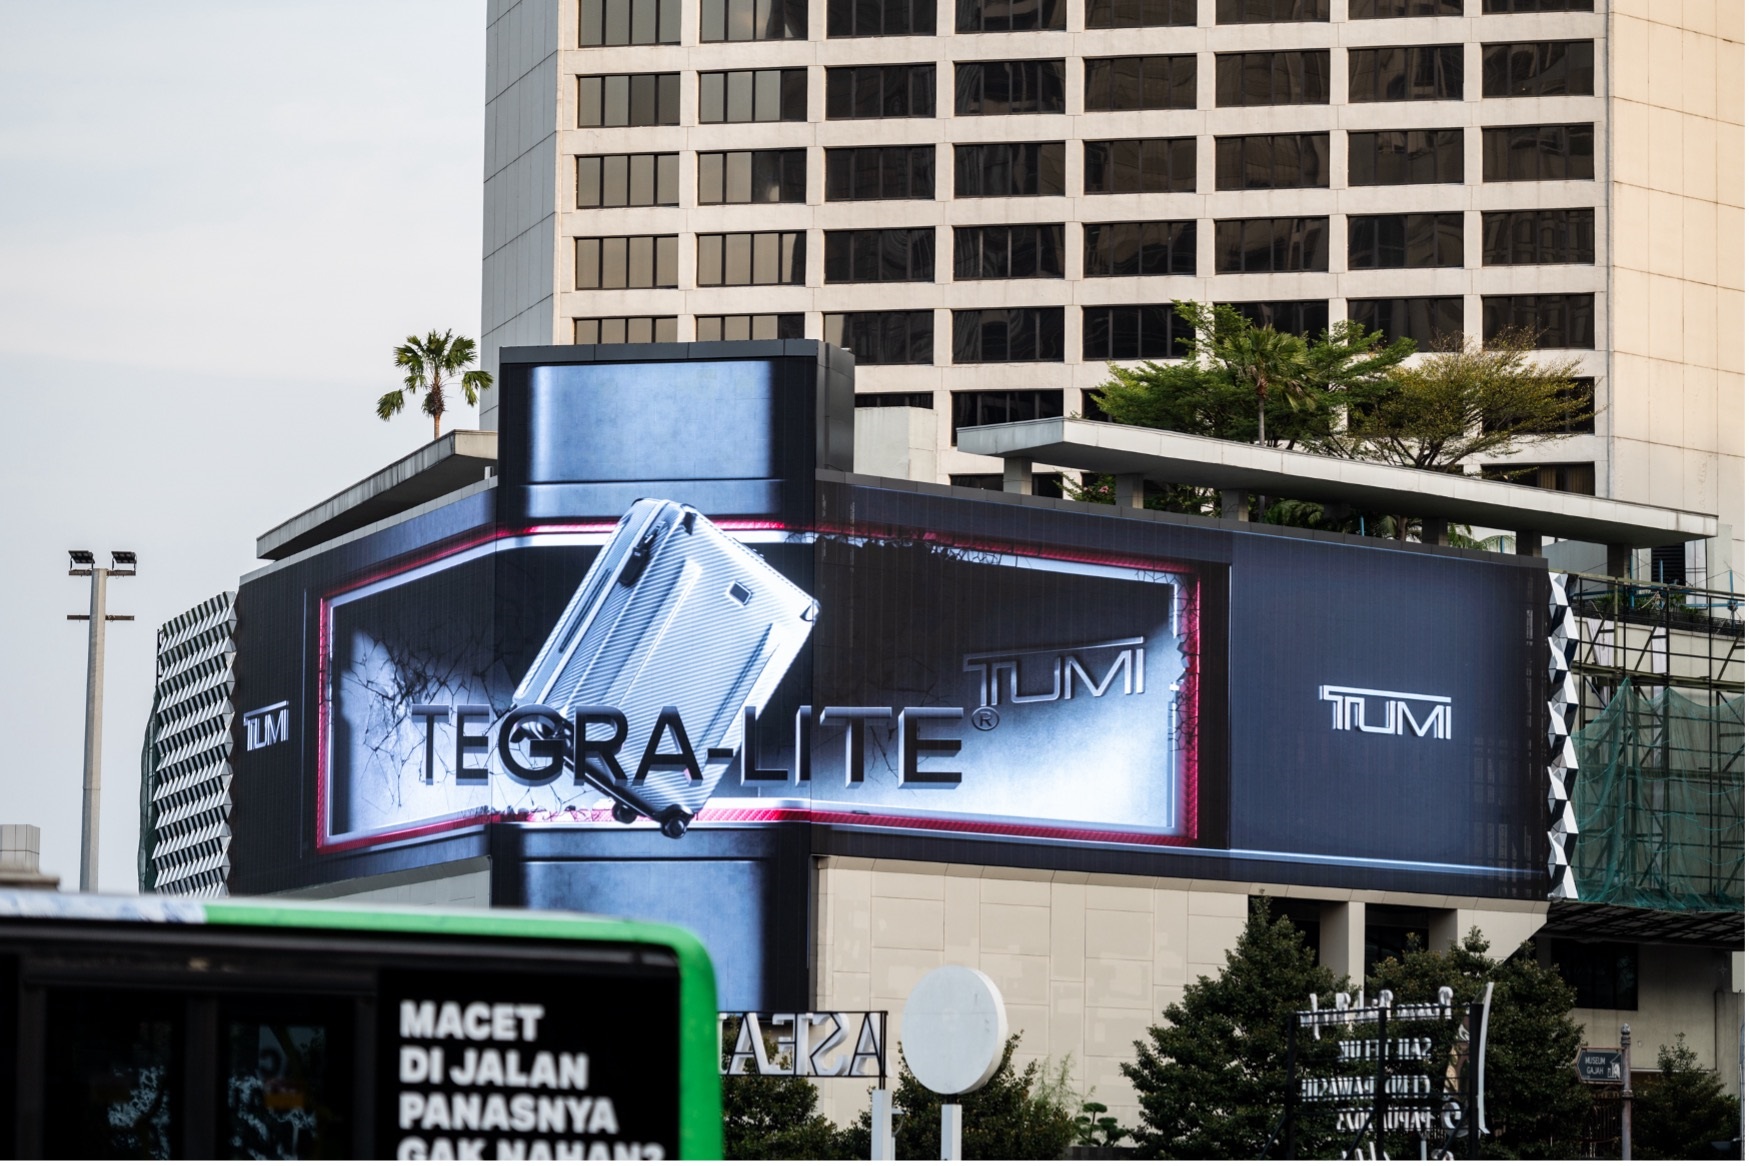 TEGRA-LITE 3D Advertisement at Mandarin Oriental, Jakarta in Indonesia